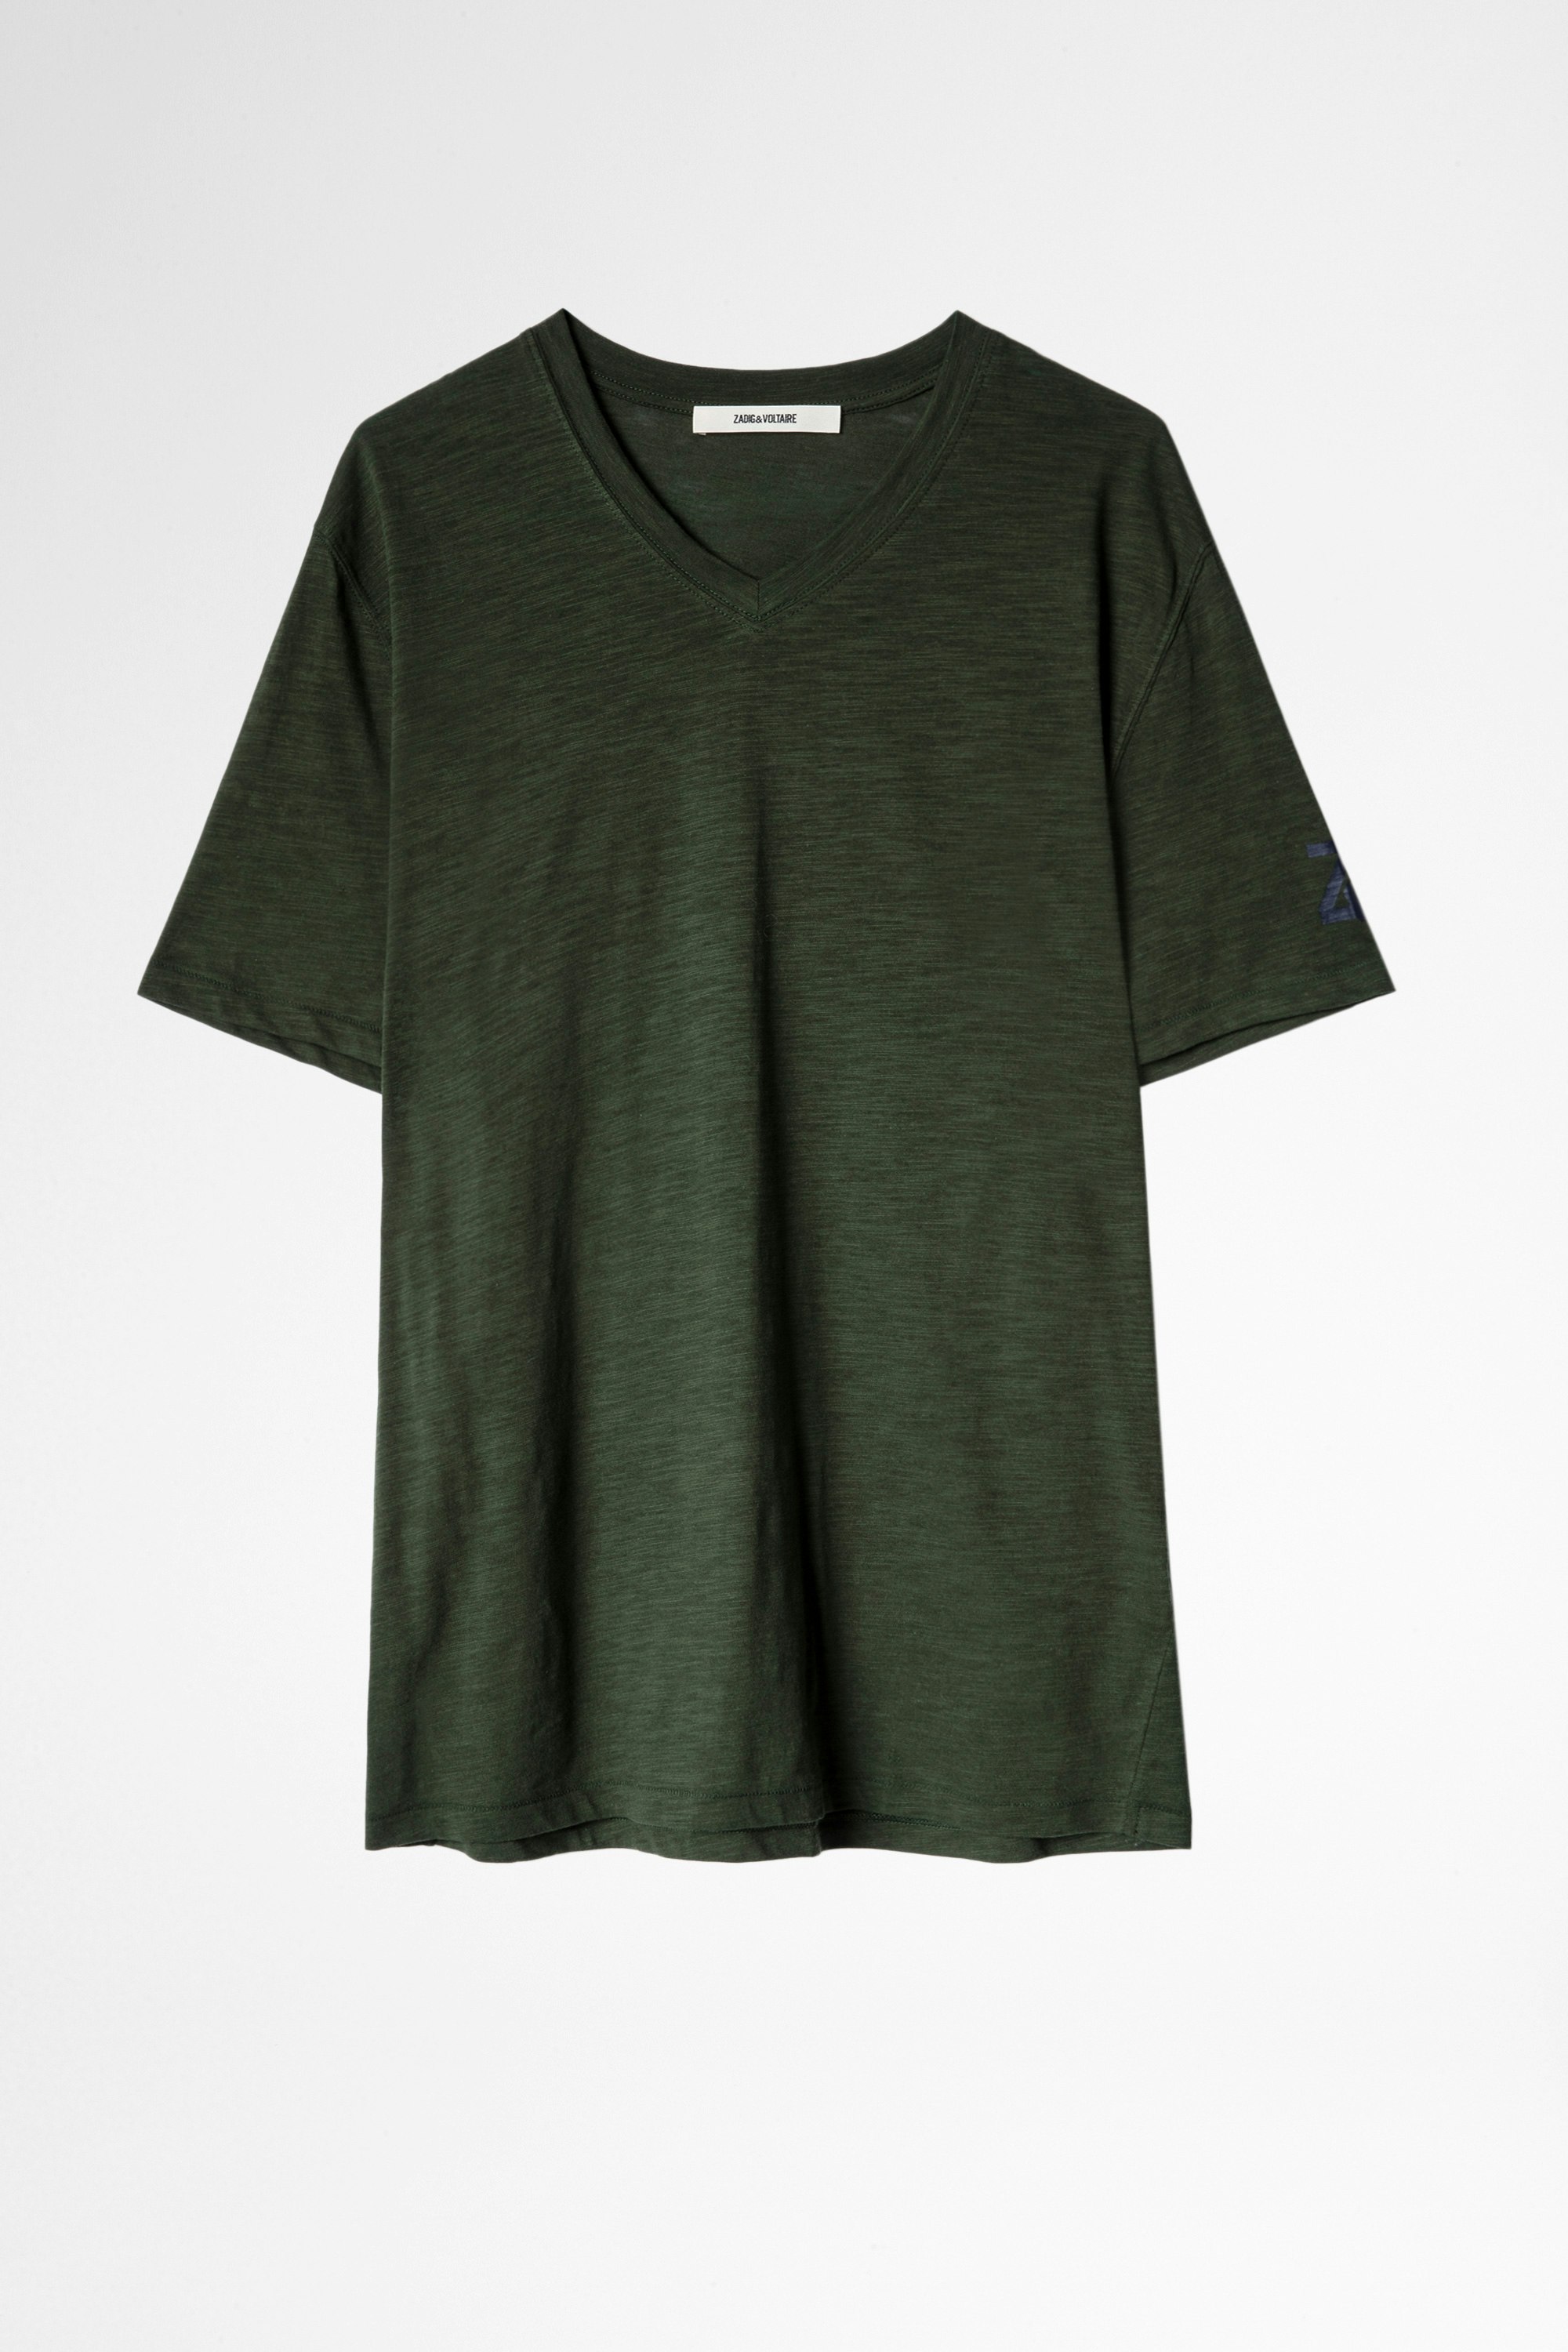 T-Shirt Stocky Khakifarbenes Herren-T-Shirt aus Baumwolle